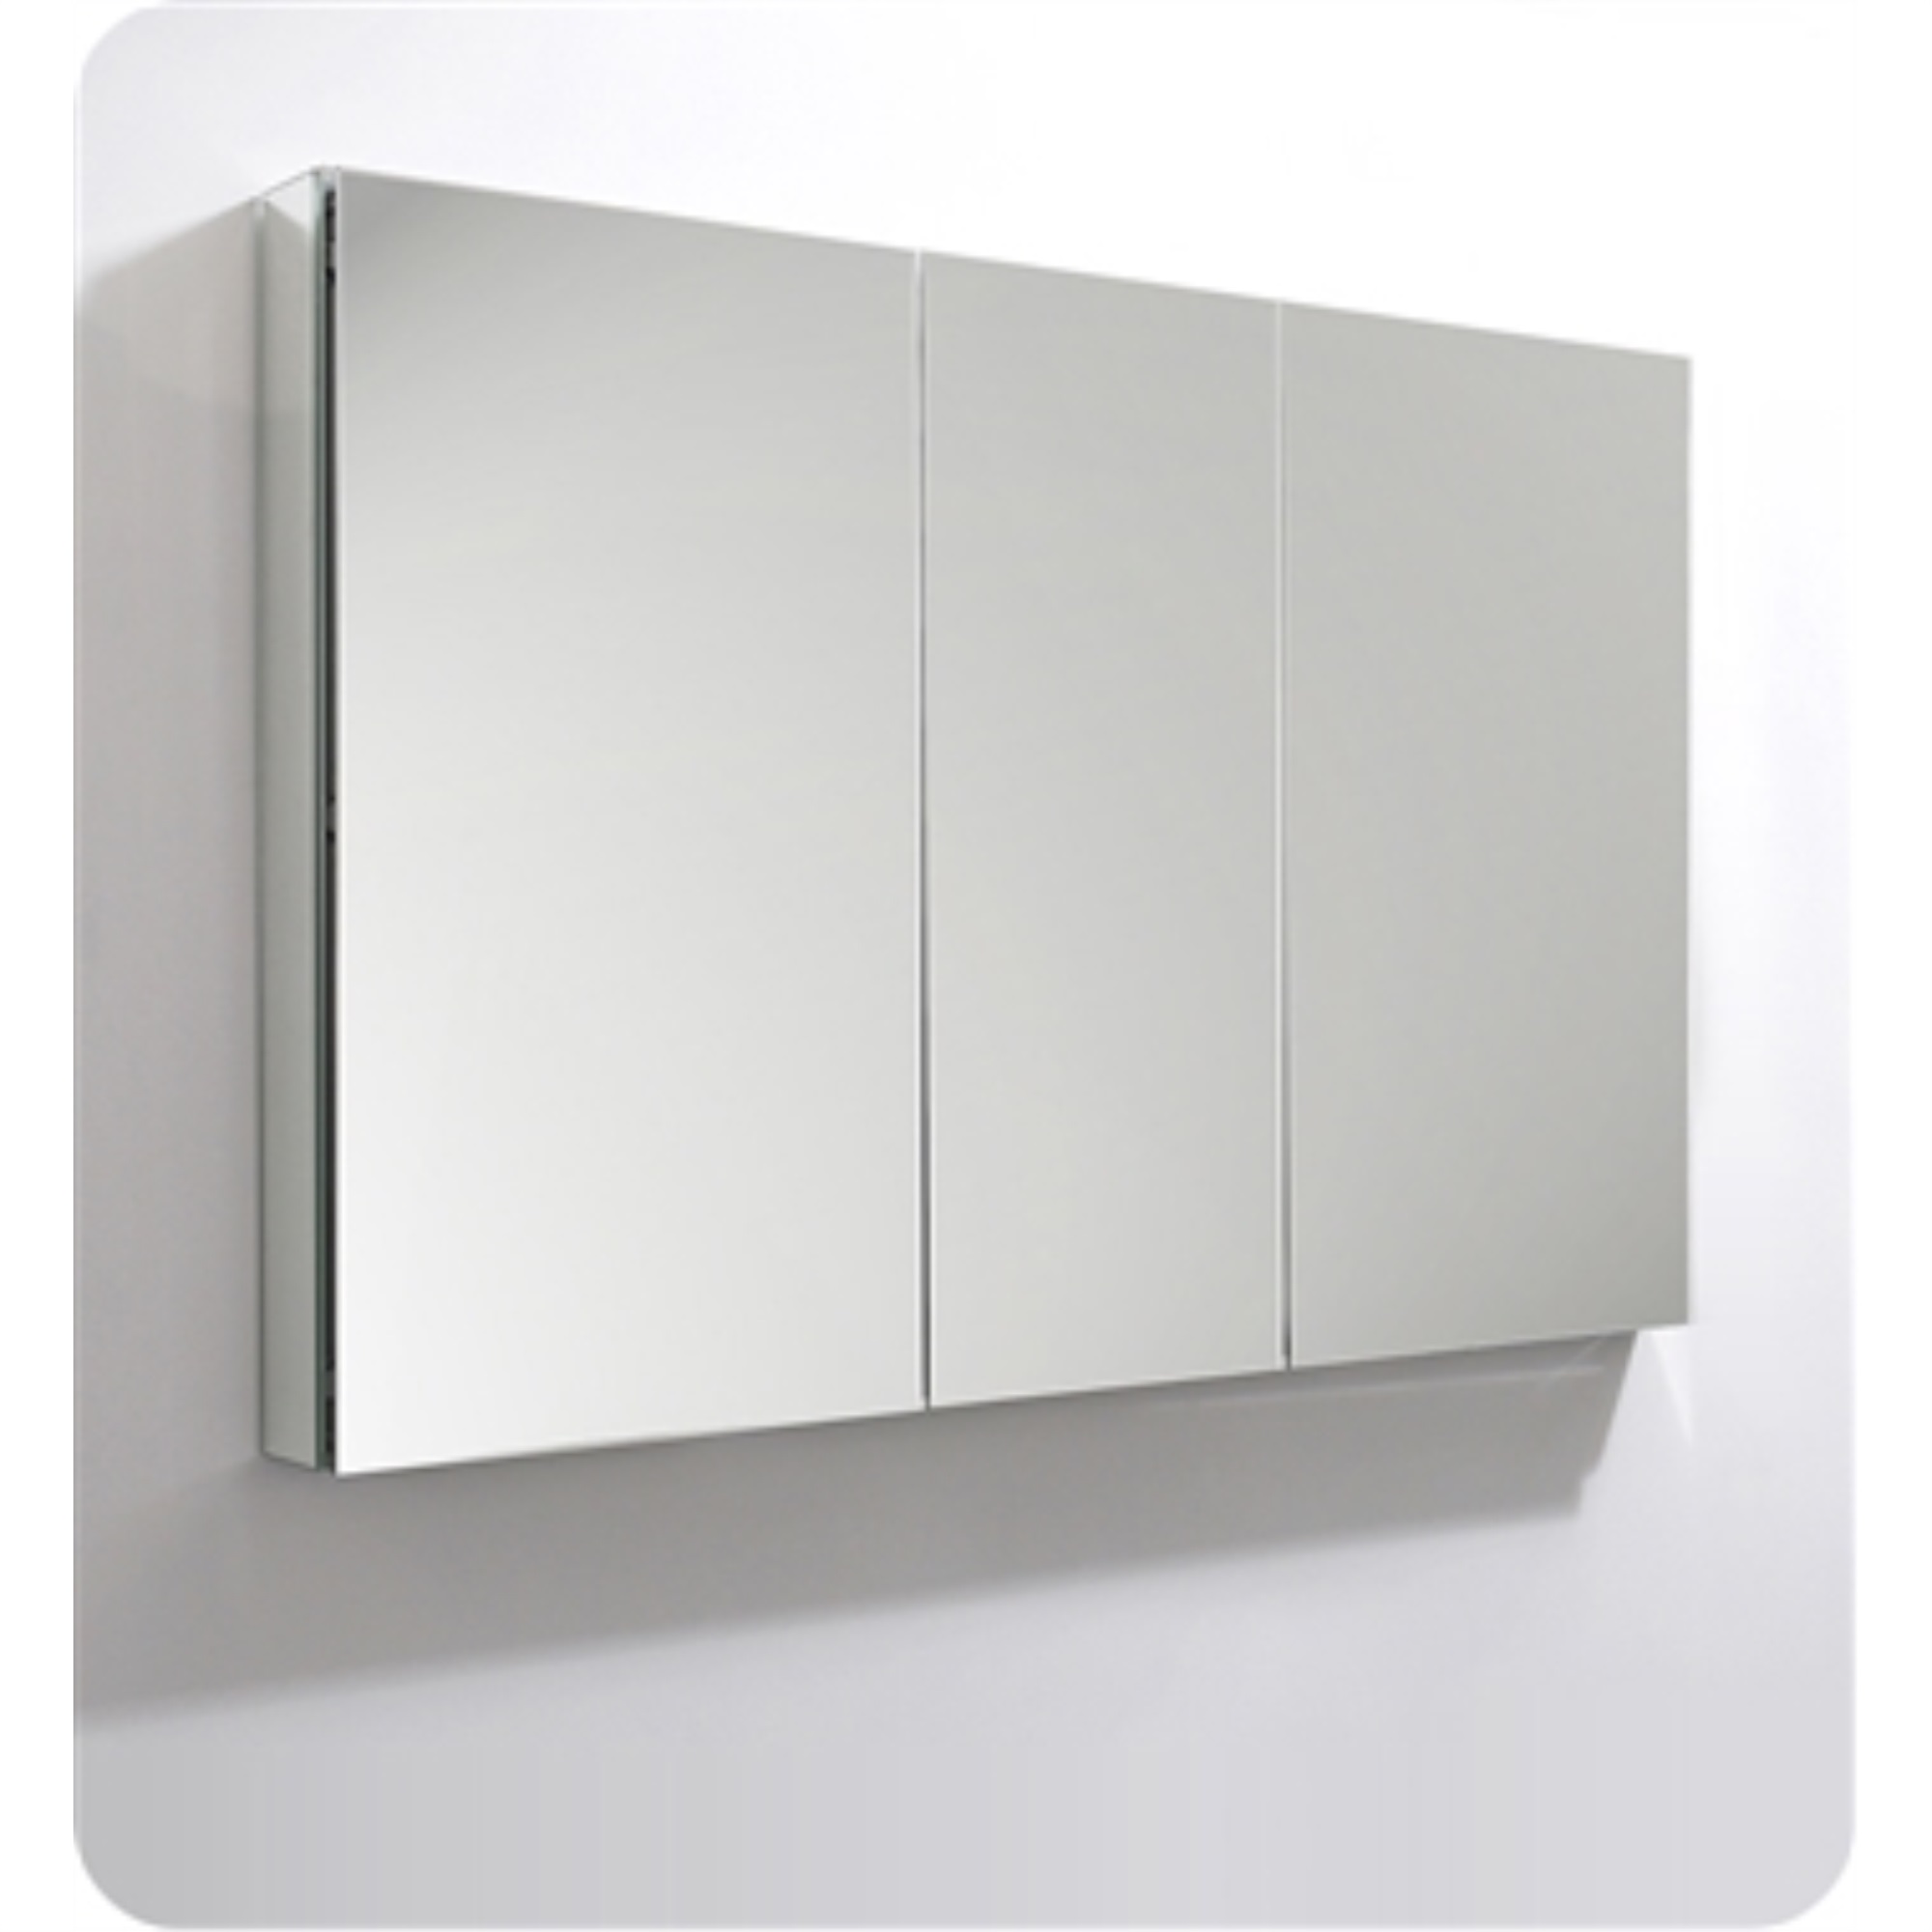 Fresca Senza 50" Aluminum Bathroom Medicine Cabinet with Mirrors in Mirrored - image 1 of 3